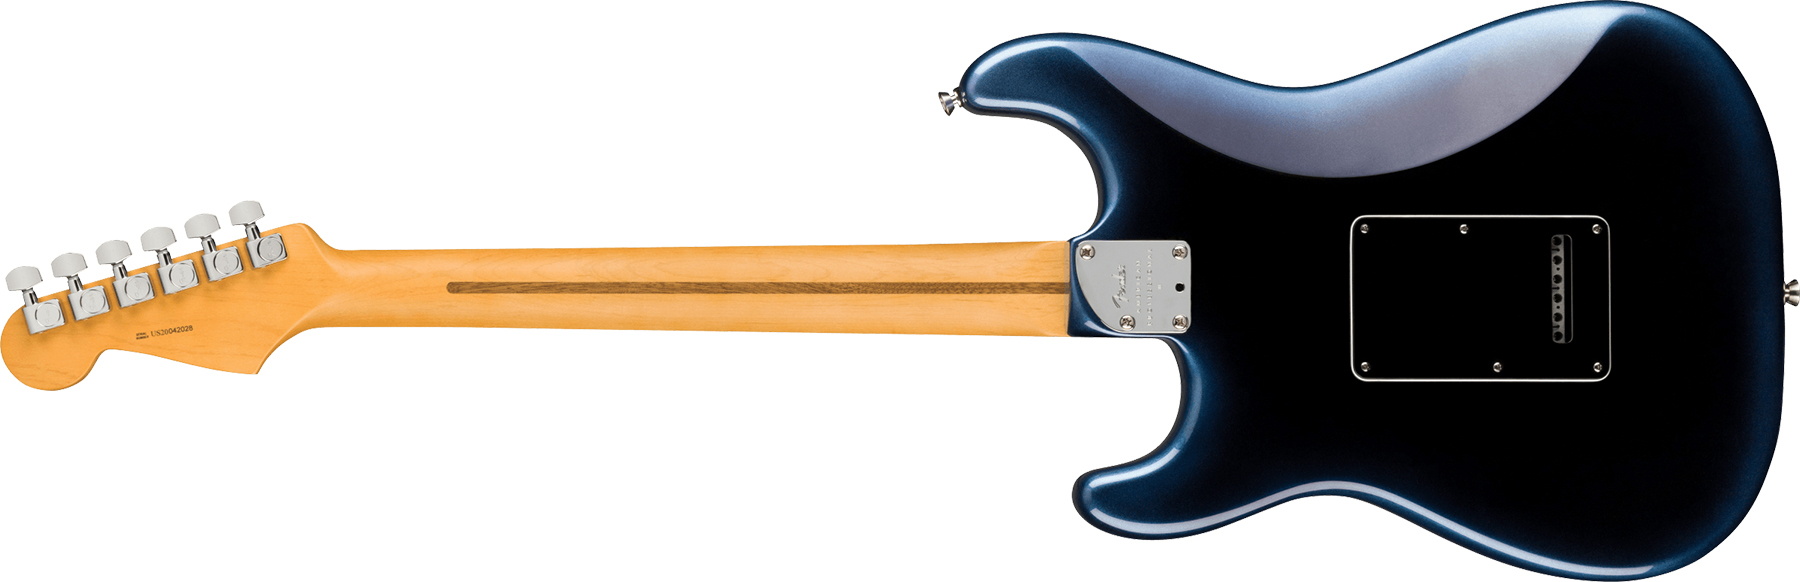 Fender Strat American Professional Ii Usa Mn - Dark Night - Str shape electric guitar - Variation 1